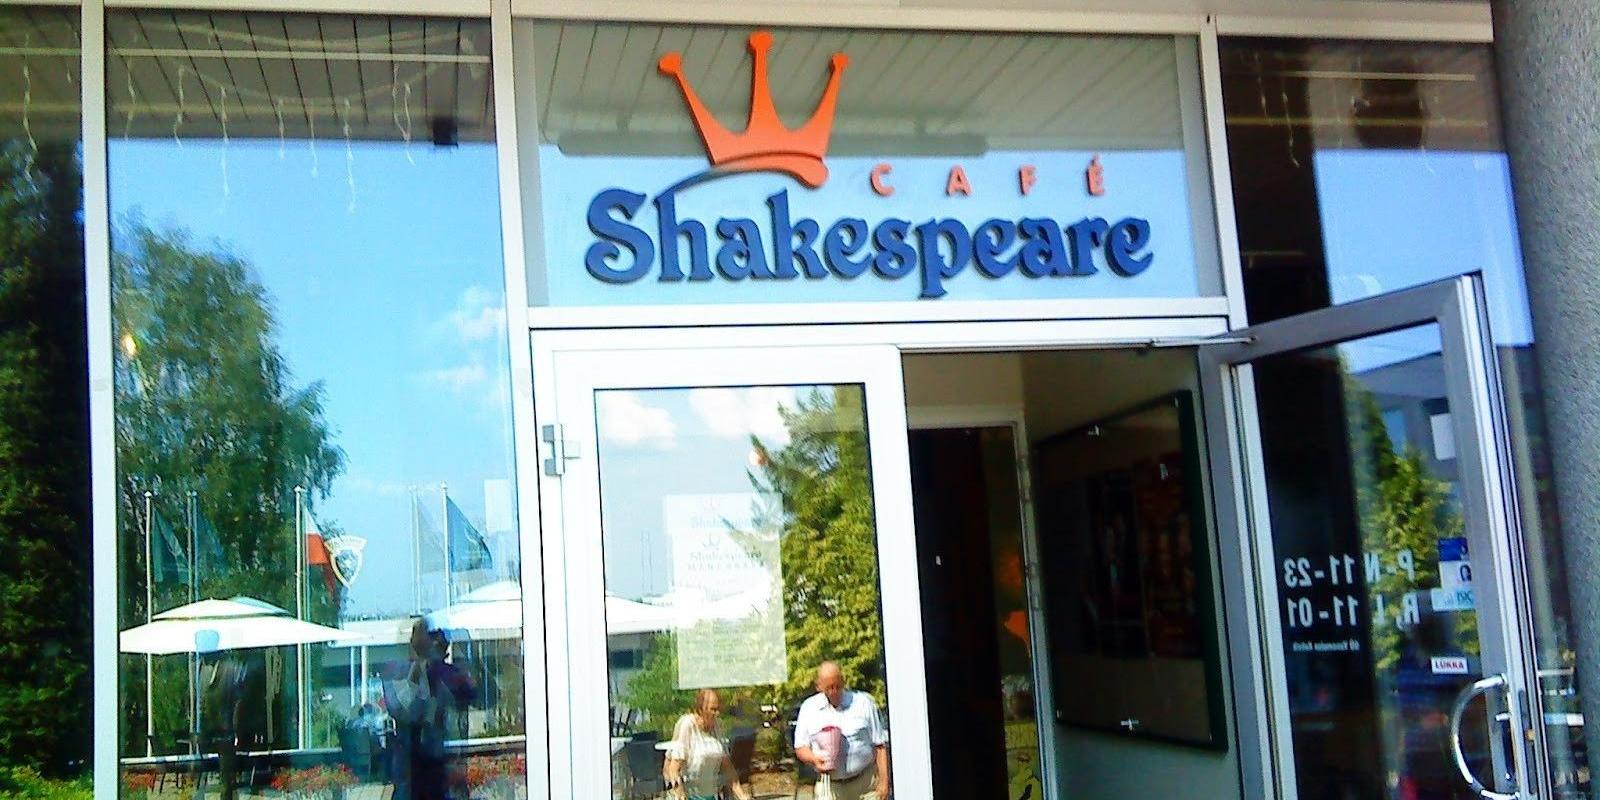 Café Shakespeare